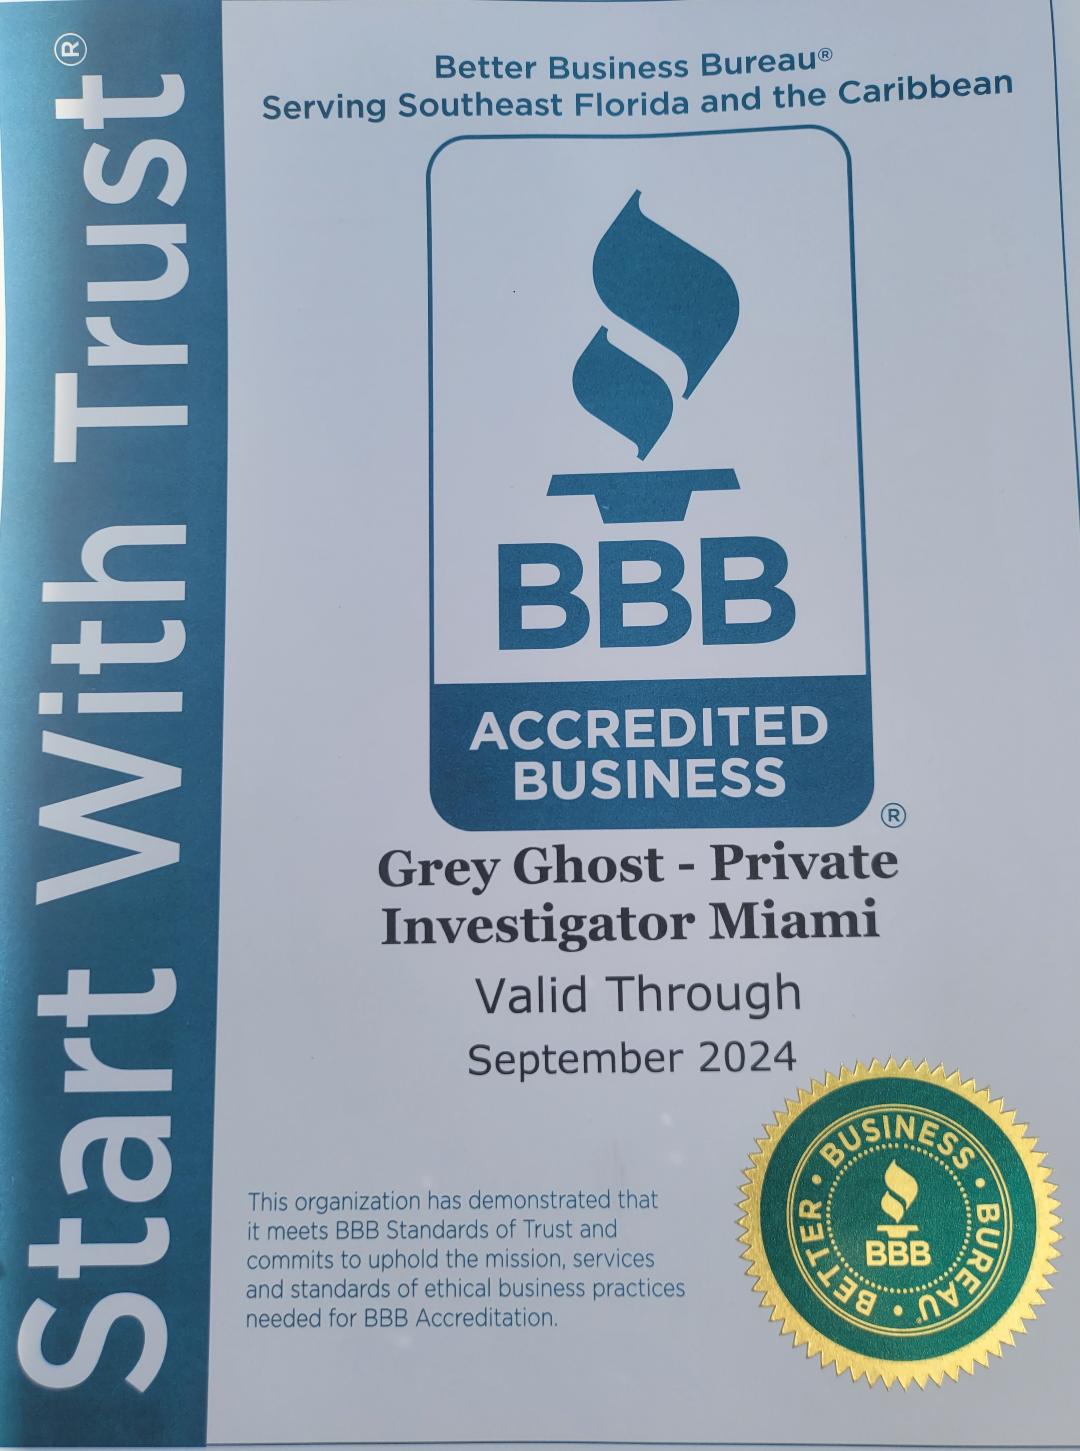 Grey Ghost - Miami Private Investigator - Photos of Our Business -  Grey Ghost - Private Investigator Miami